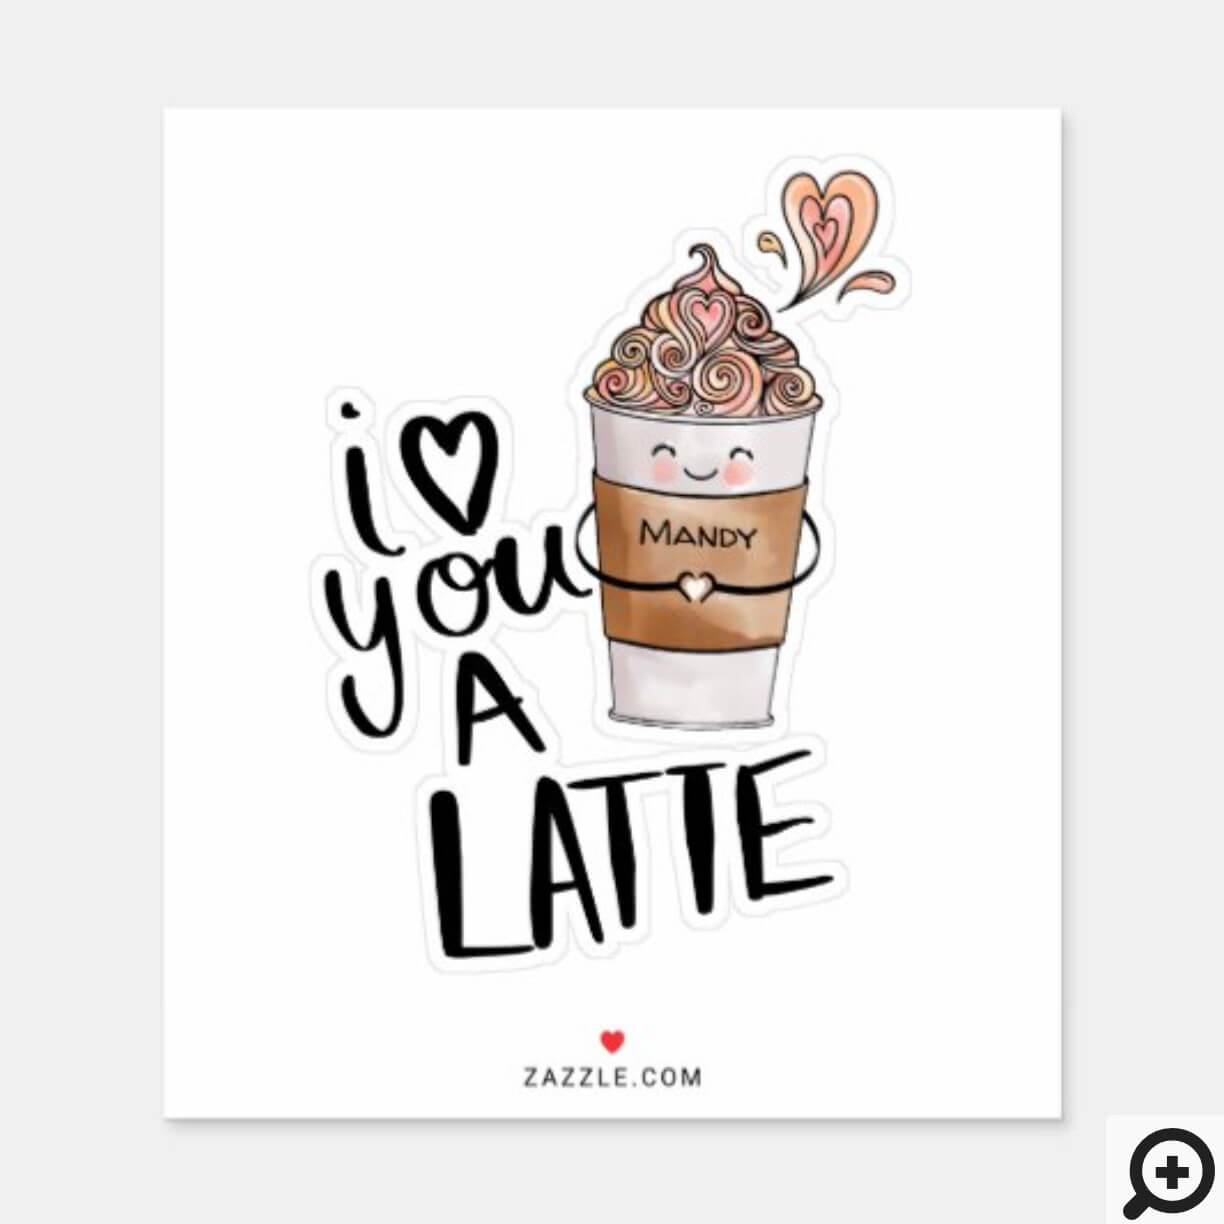 https://moodthology.com/wp-content/uploads/2020/04/I-Love-You-A-Latte-Cute-Kawaii-Coffee-Cup-Name-Sticker1-1.jpg